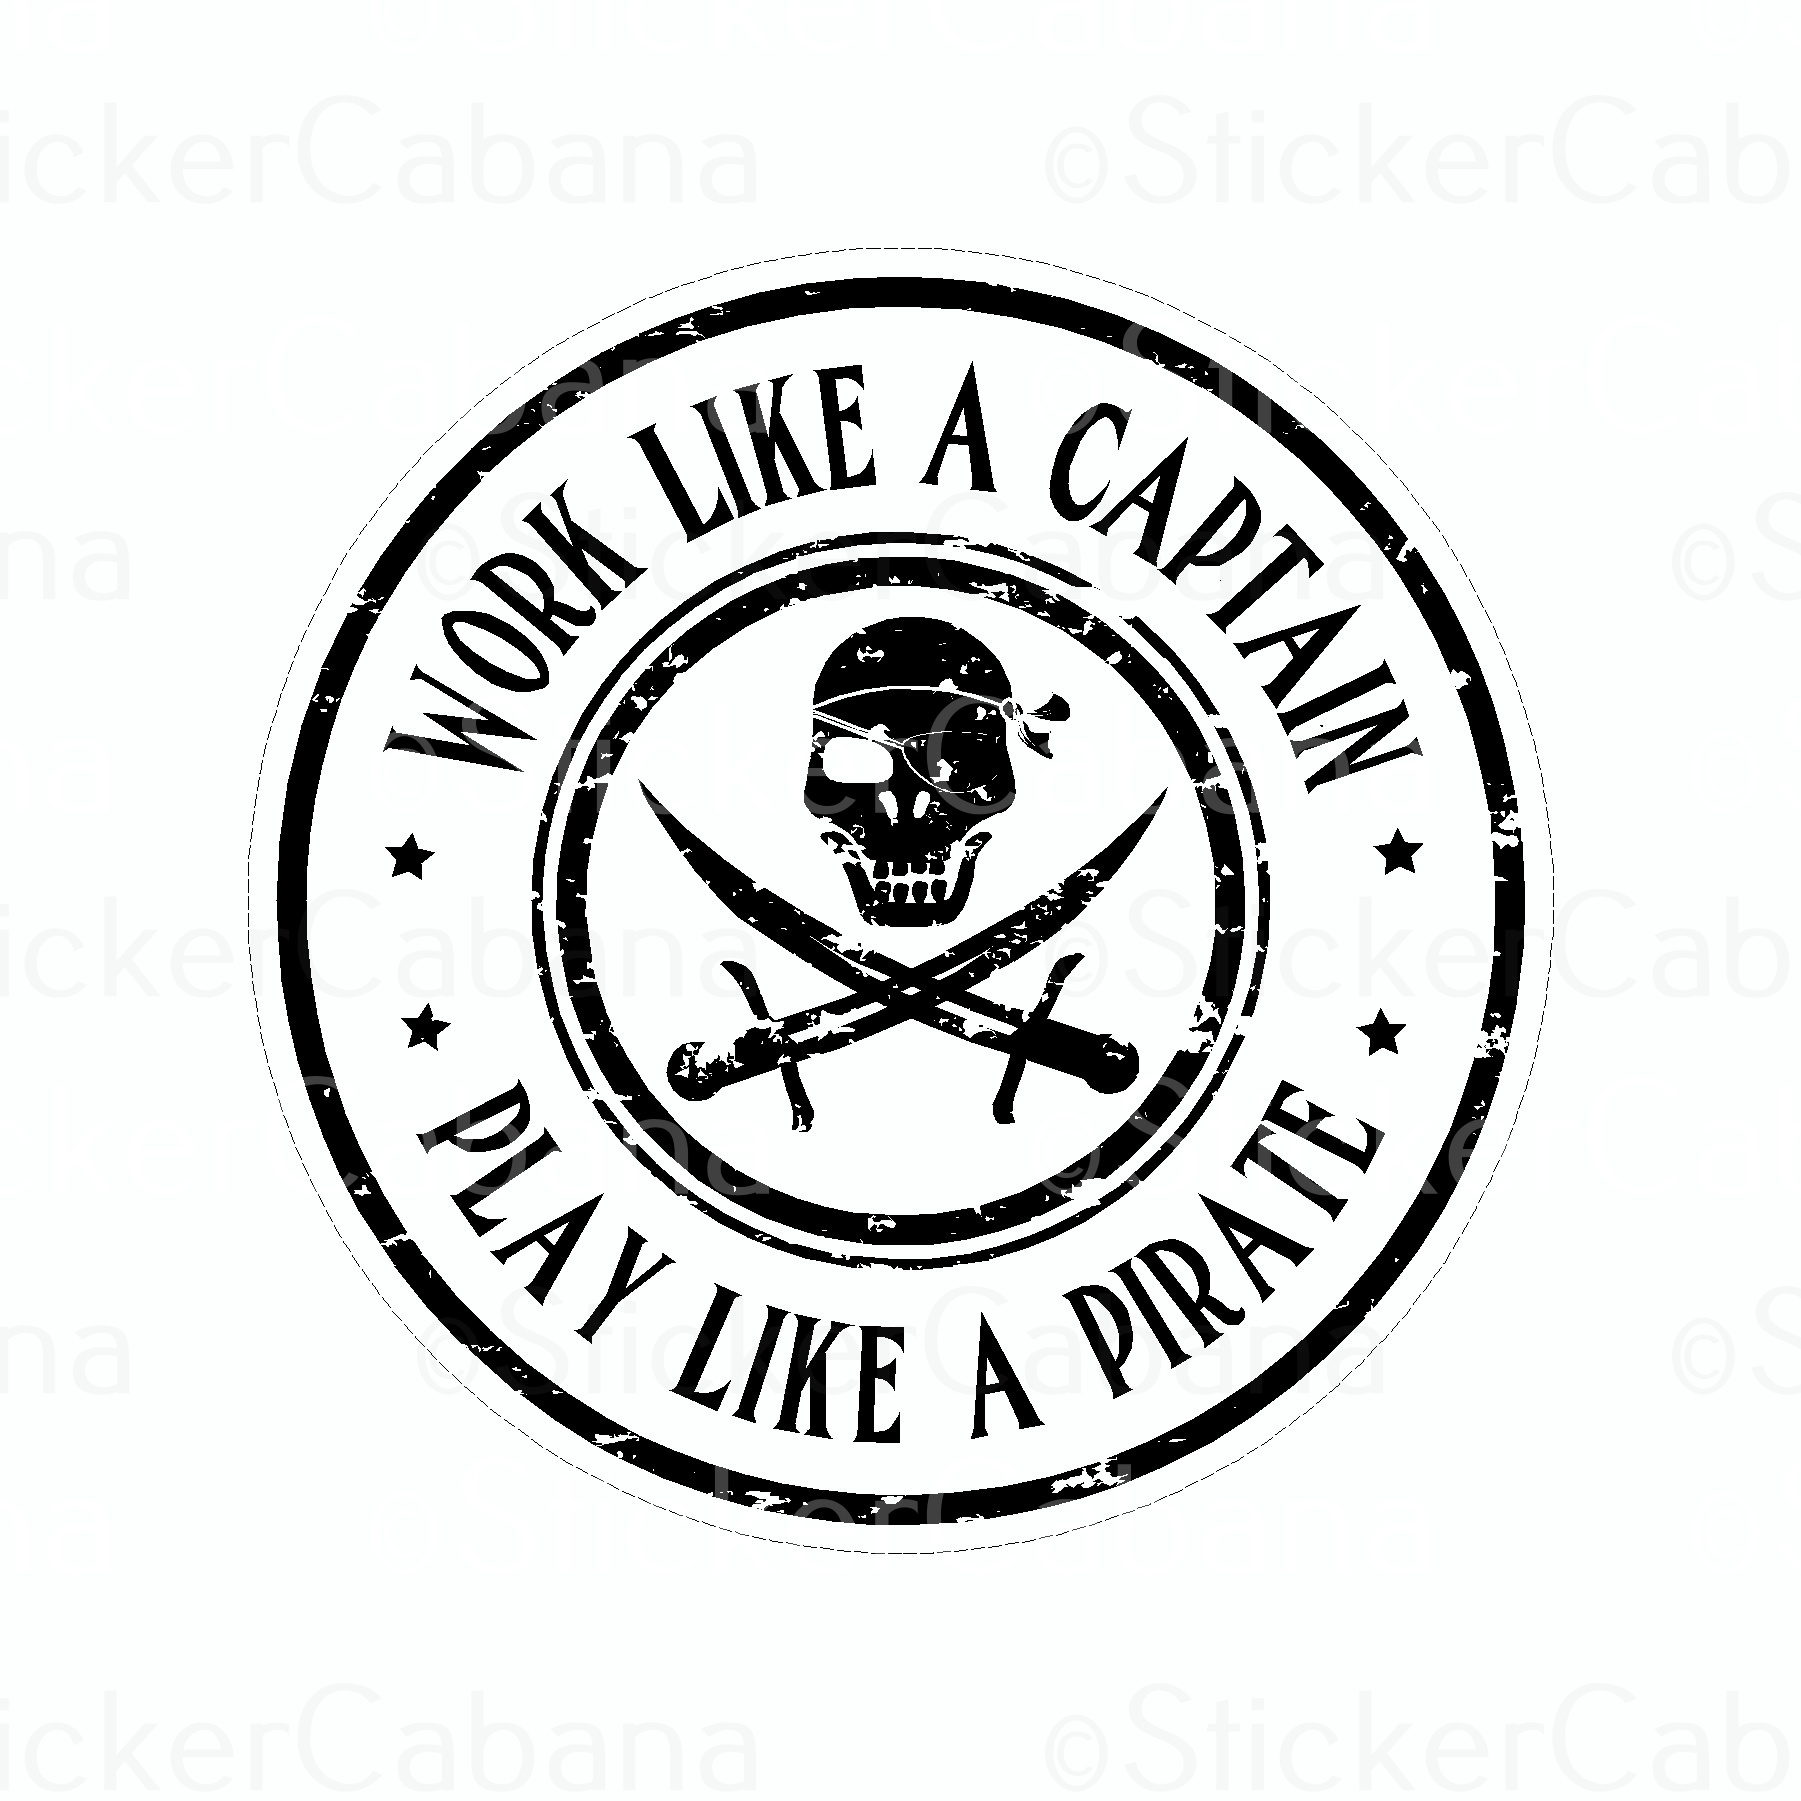 Sticker Cabana Work Like A Captain Play Like a Pirate Large Sticker